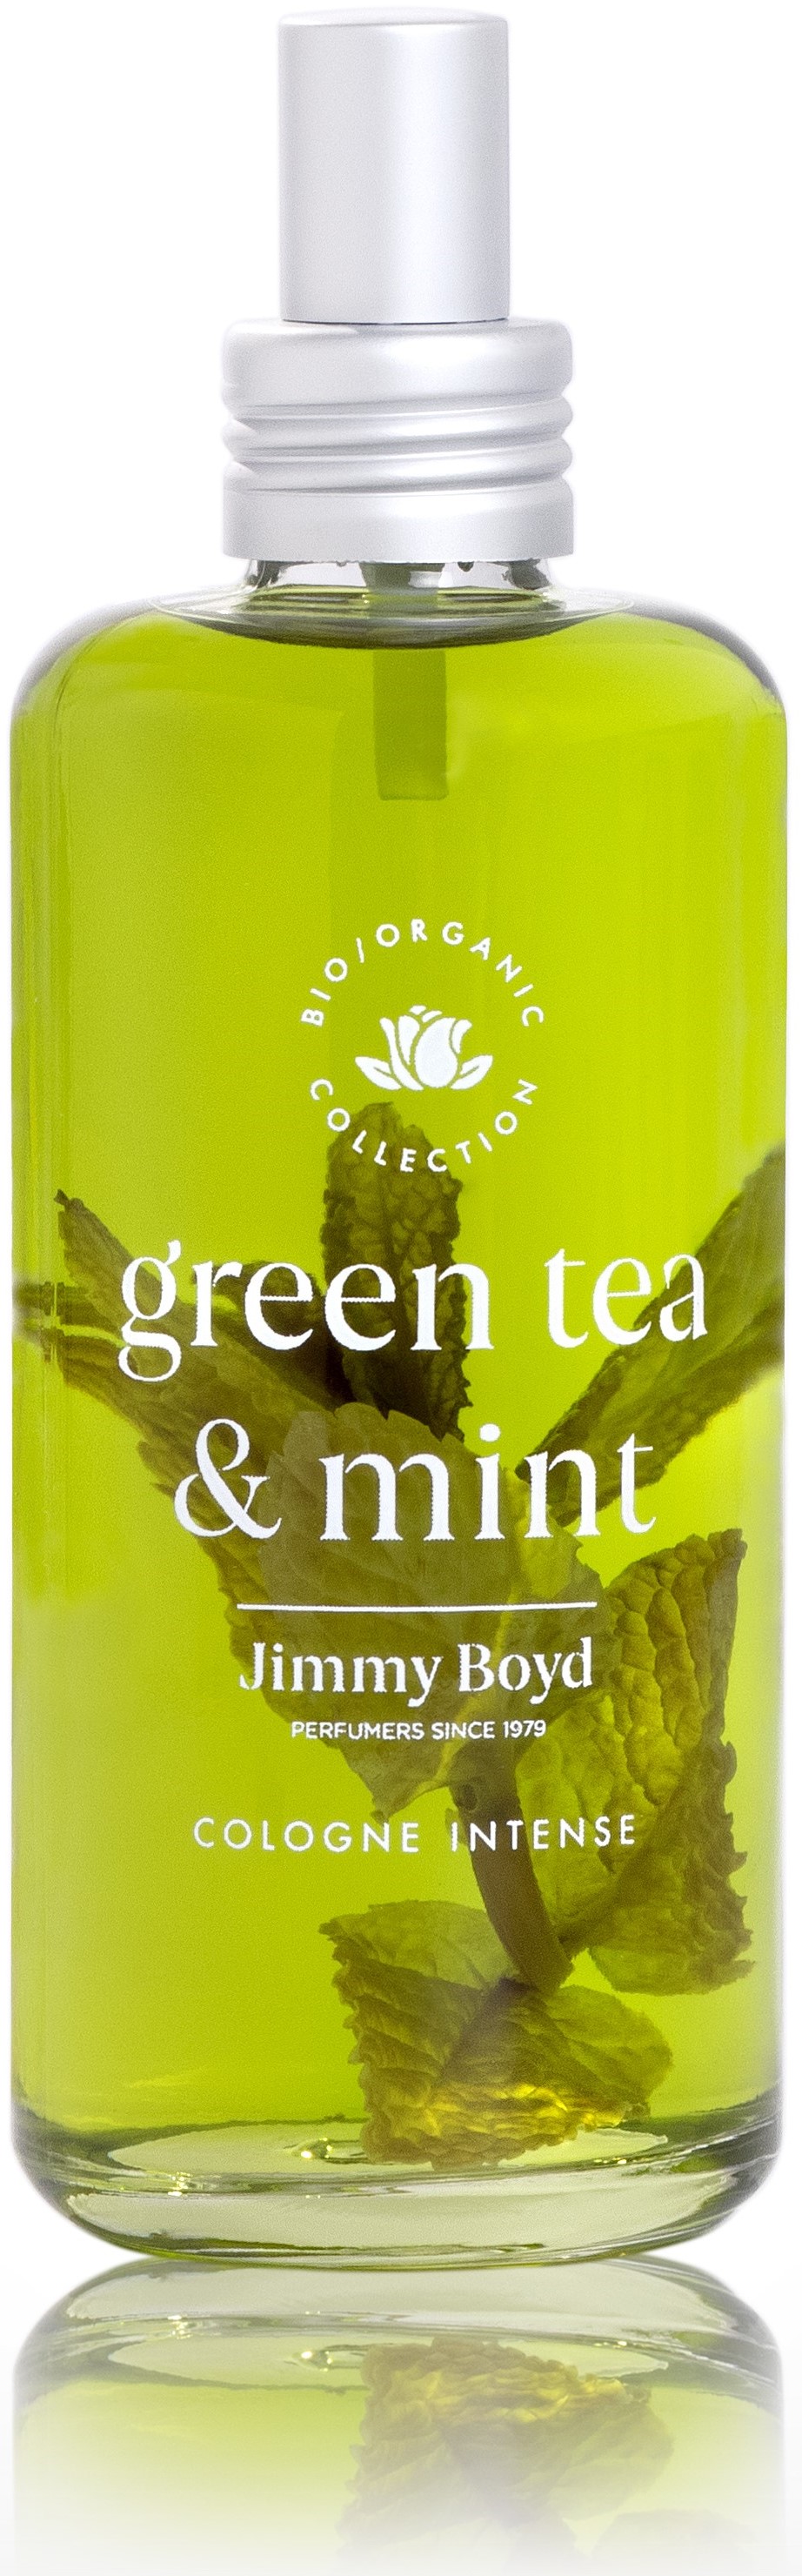 jimmy boyd green tea & mint